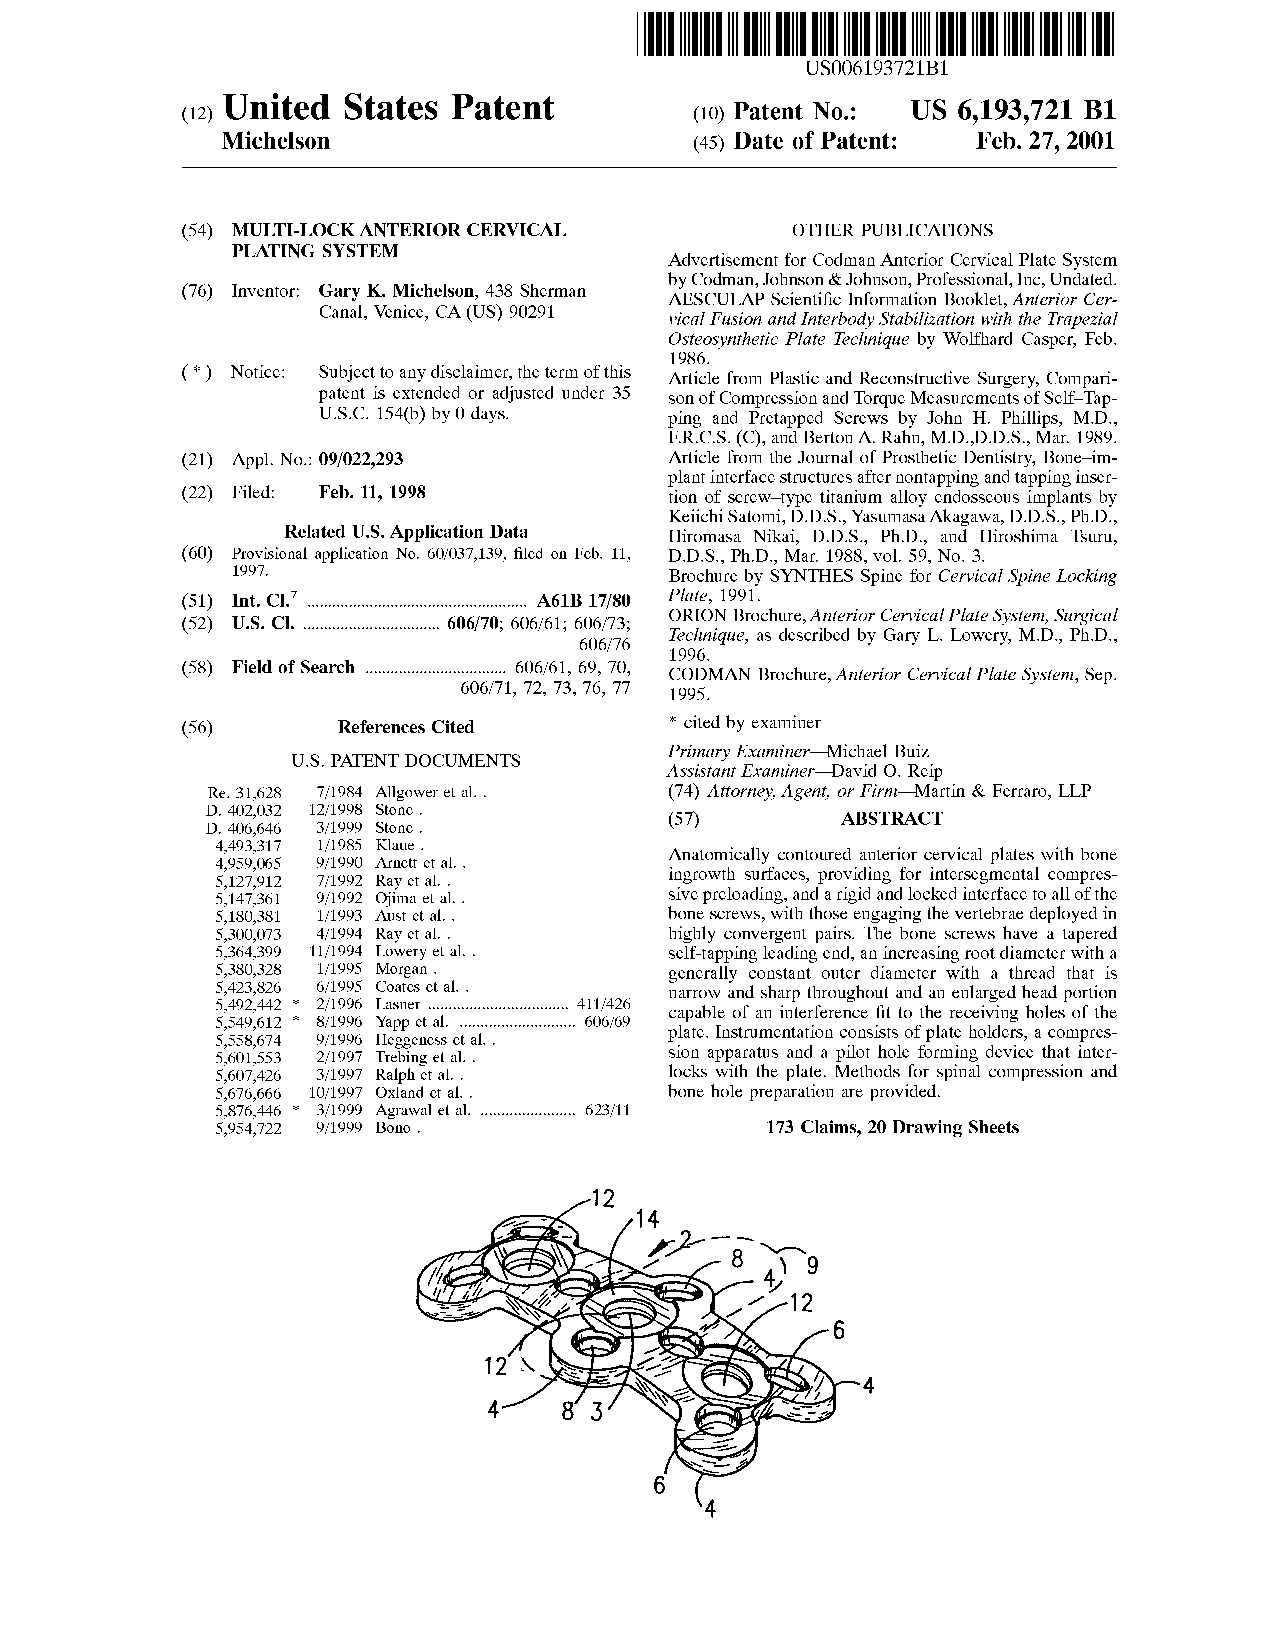 Multi-lock anterior cervical plating system - Patent 6,193,721